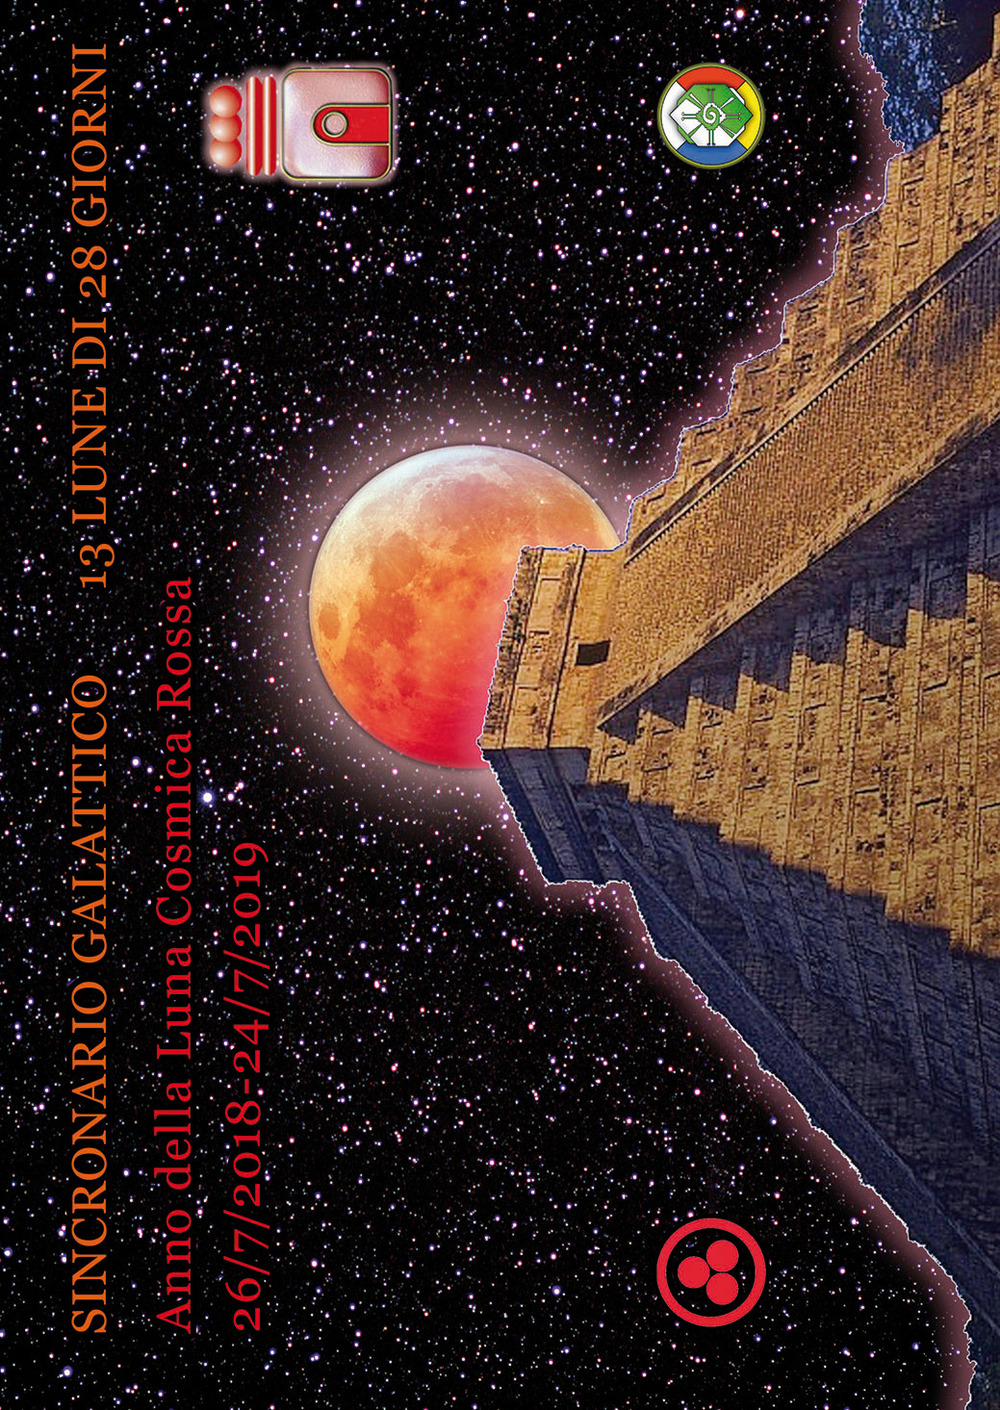 Image of Anno della luna cosmica rossa. Sincronario galattico 2018/2019